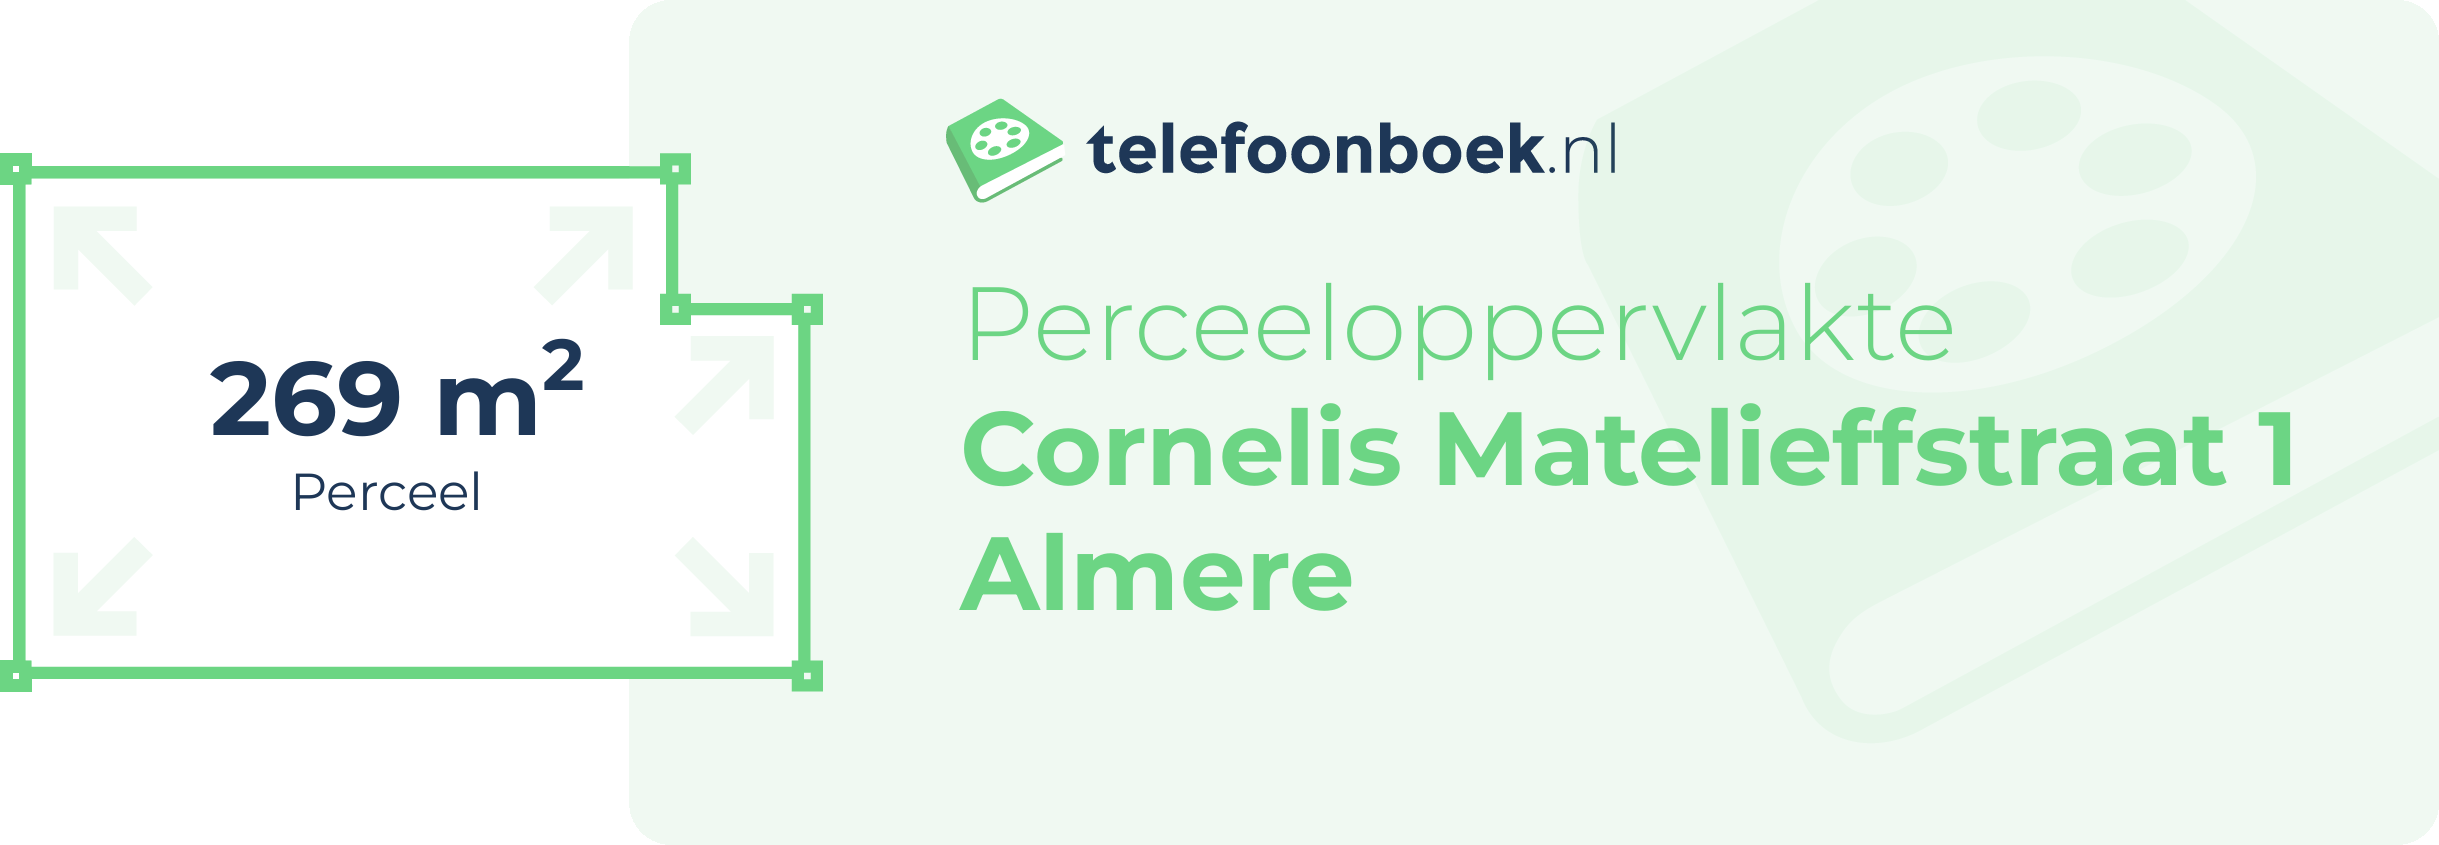 Perceeloppervlakte Cornelis Matelieffstraat 1 Almere